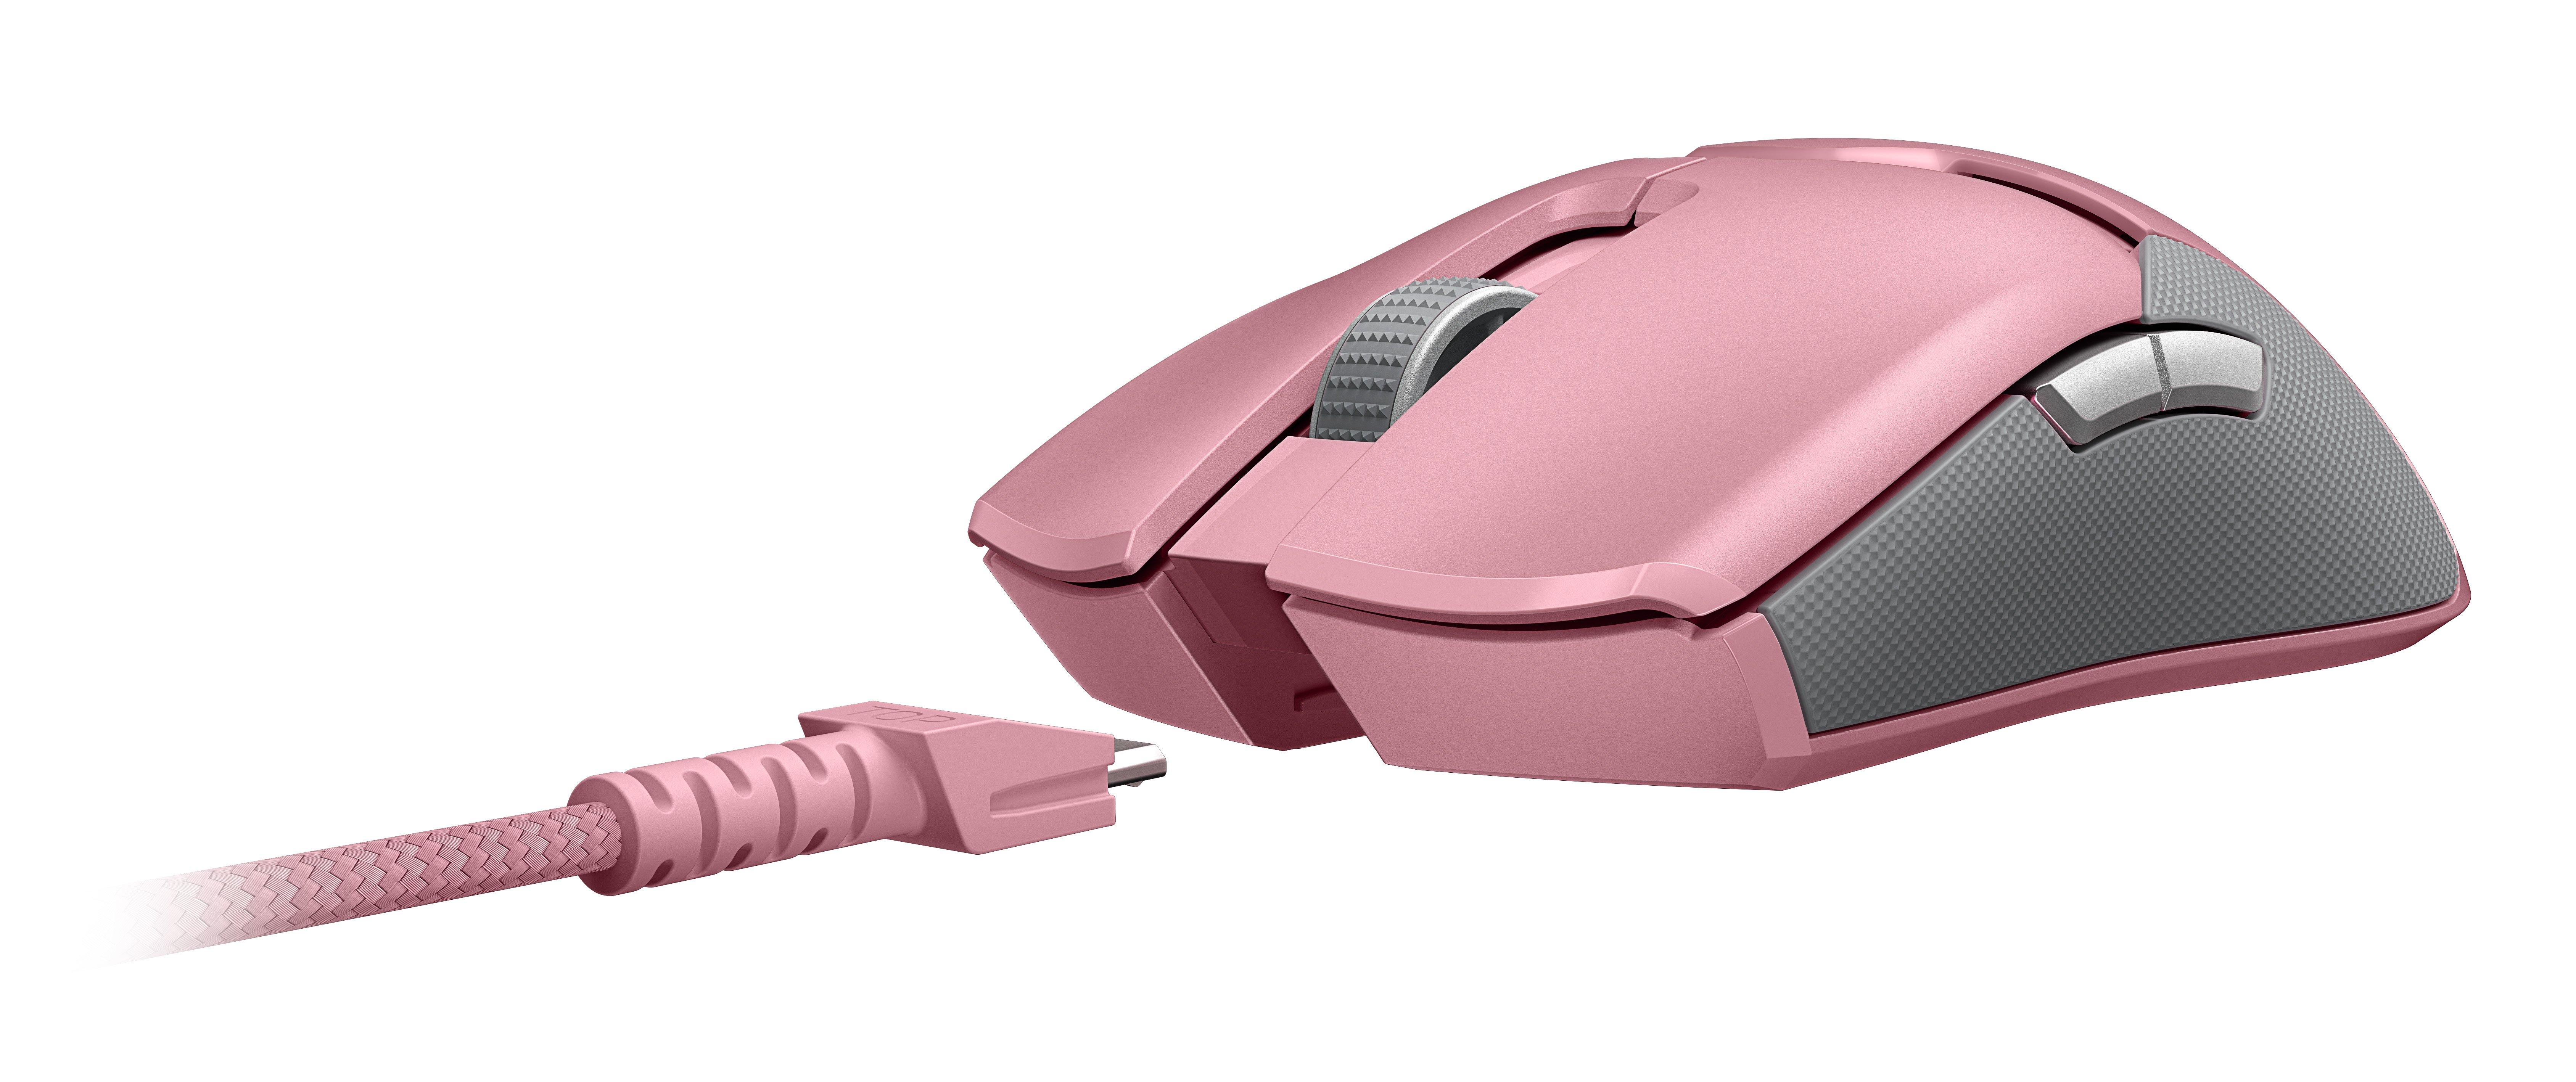 The Razer Viper Range - Ambidextrous Gaming Mouse